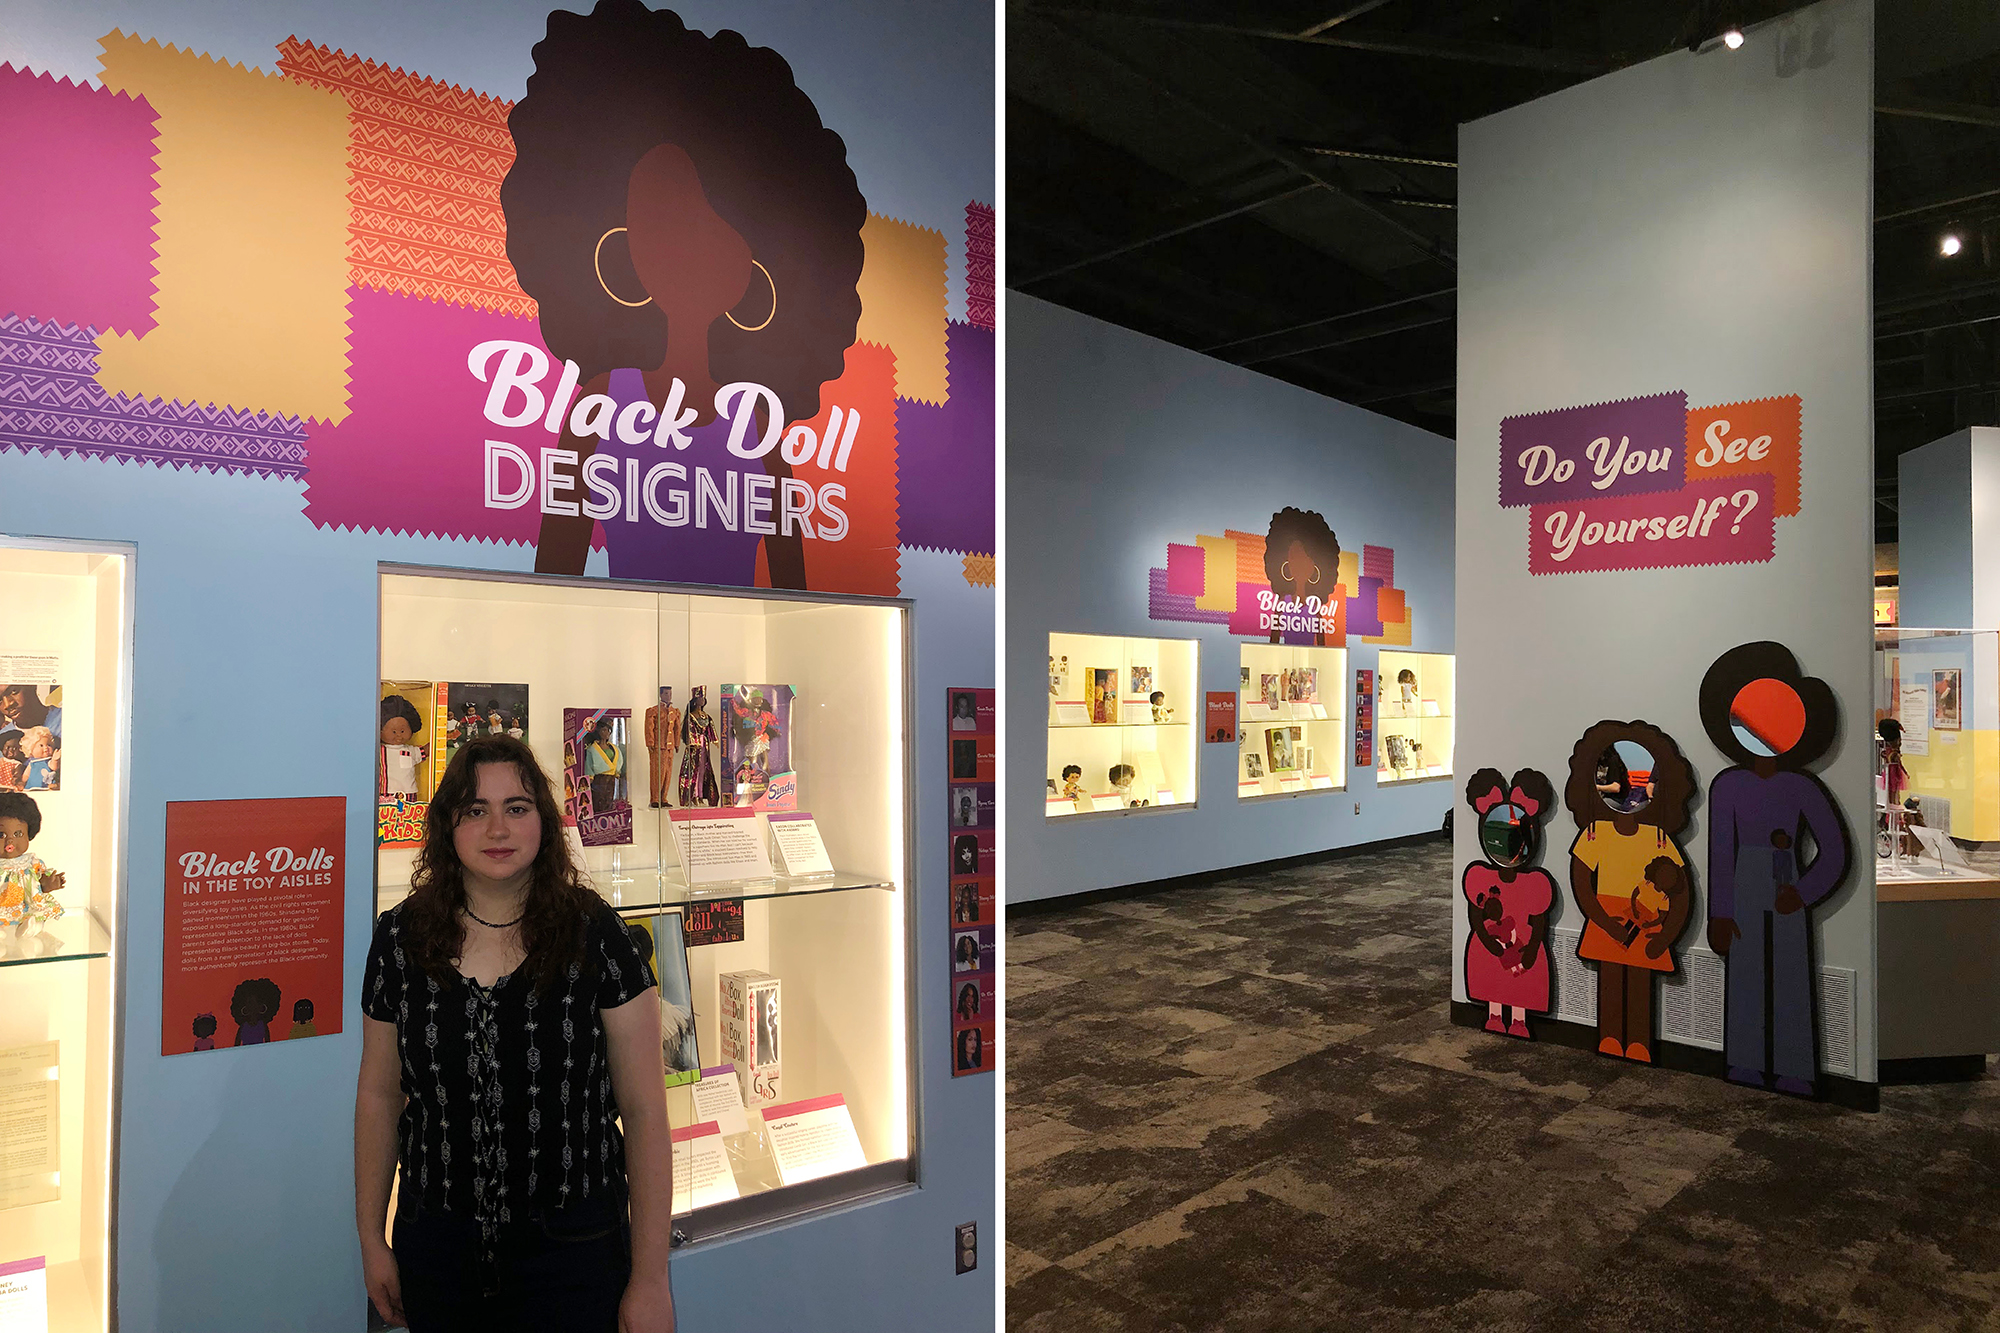 Francesca Delaney stands in front of the Black Doll Designers exhibit she designed.